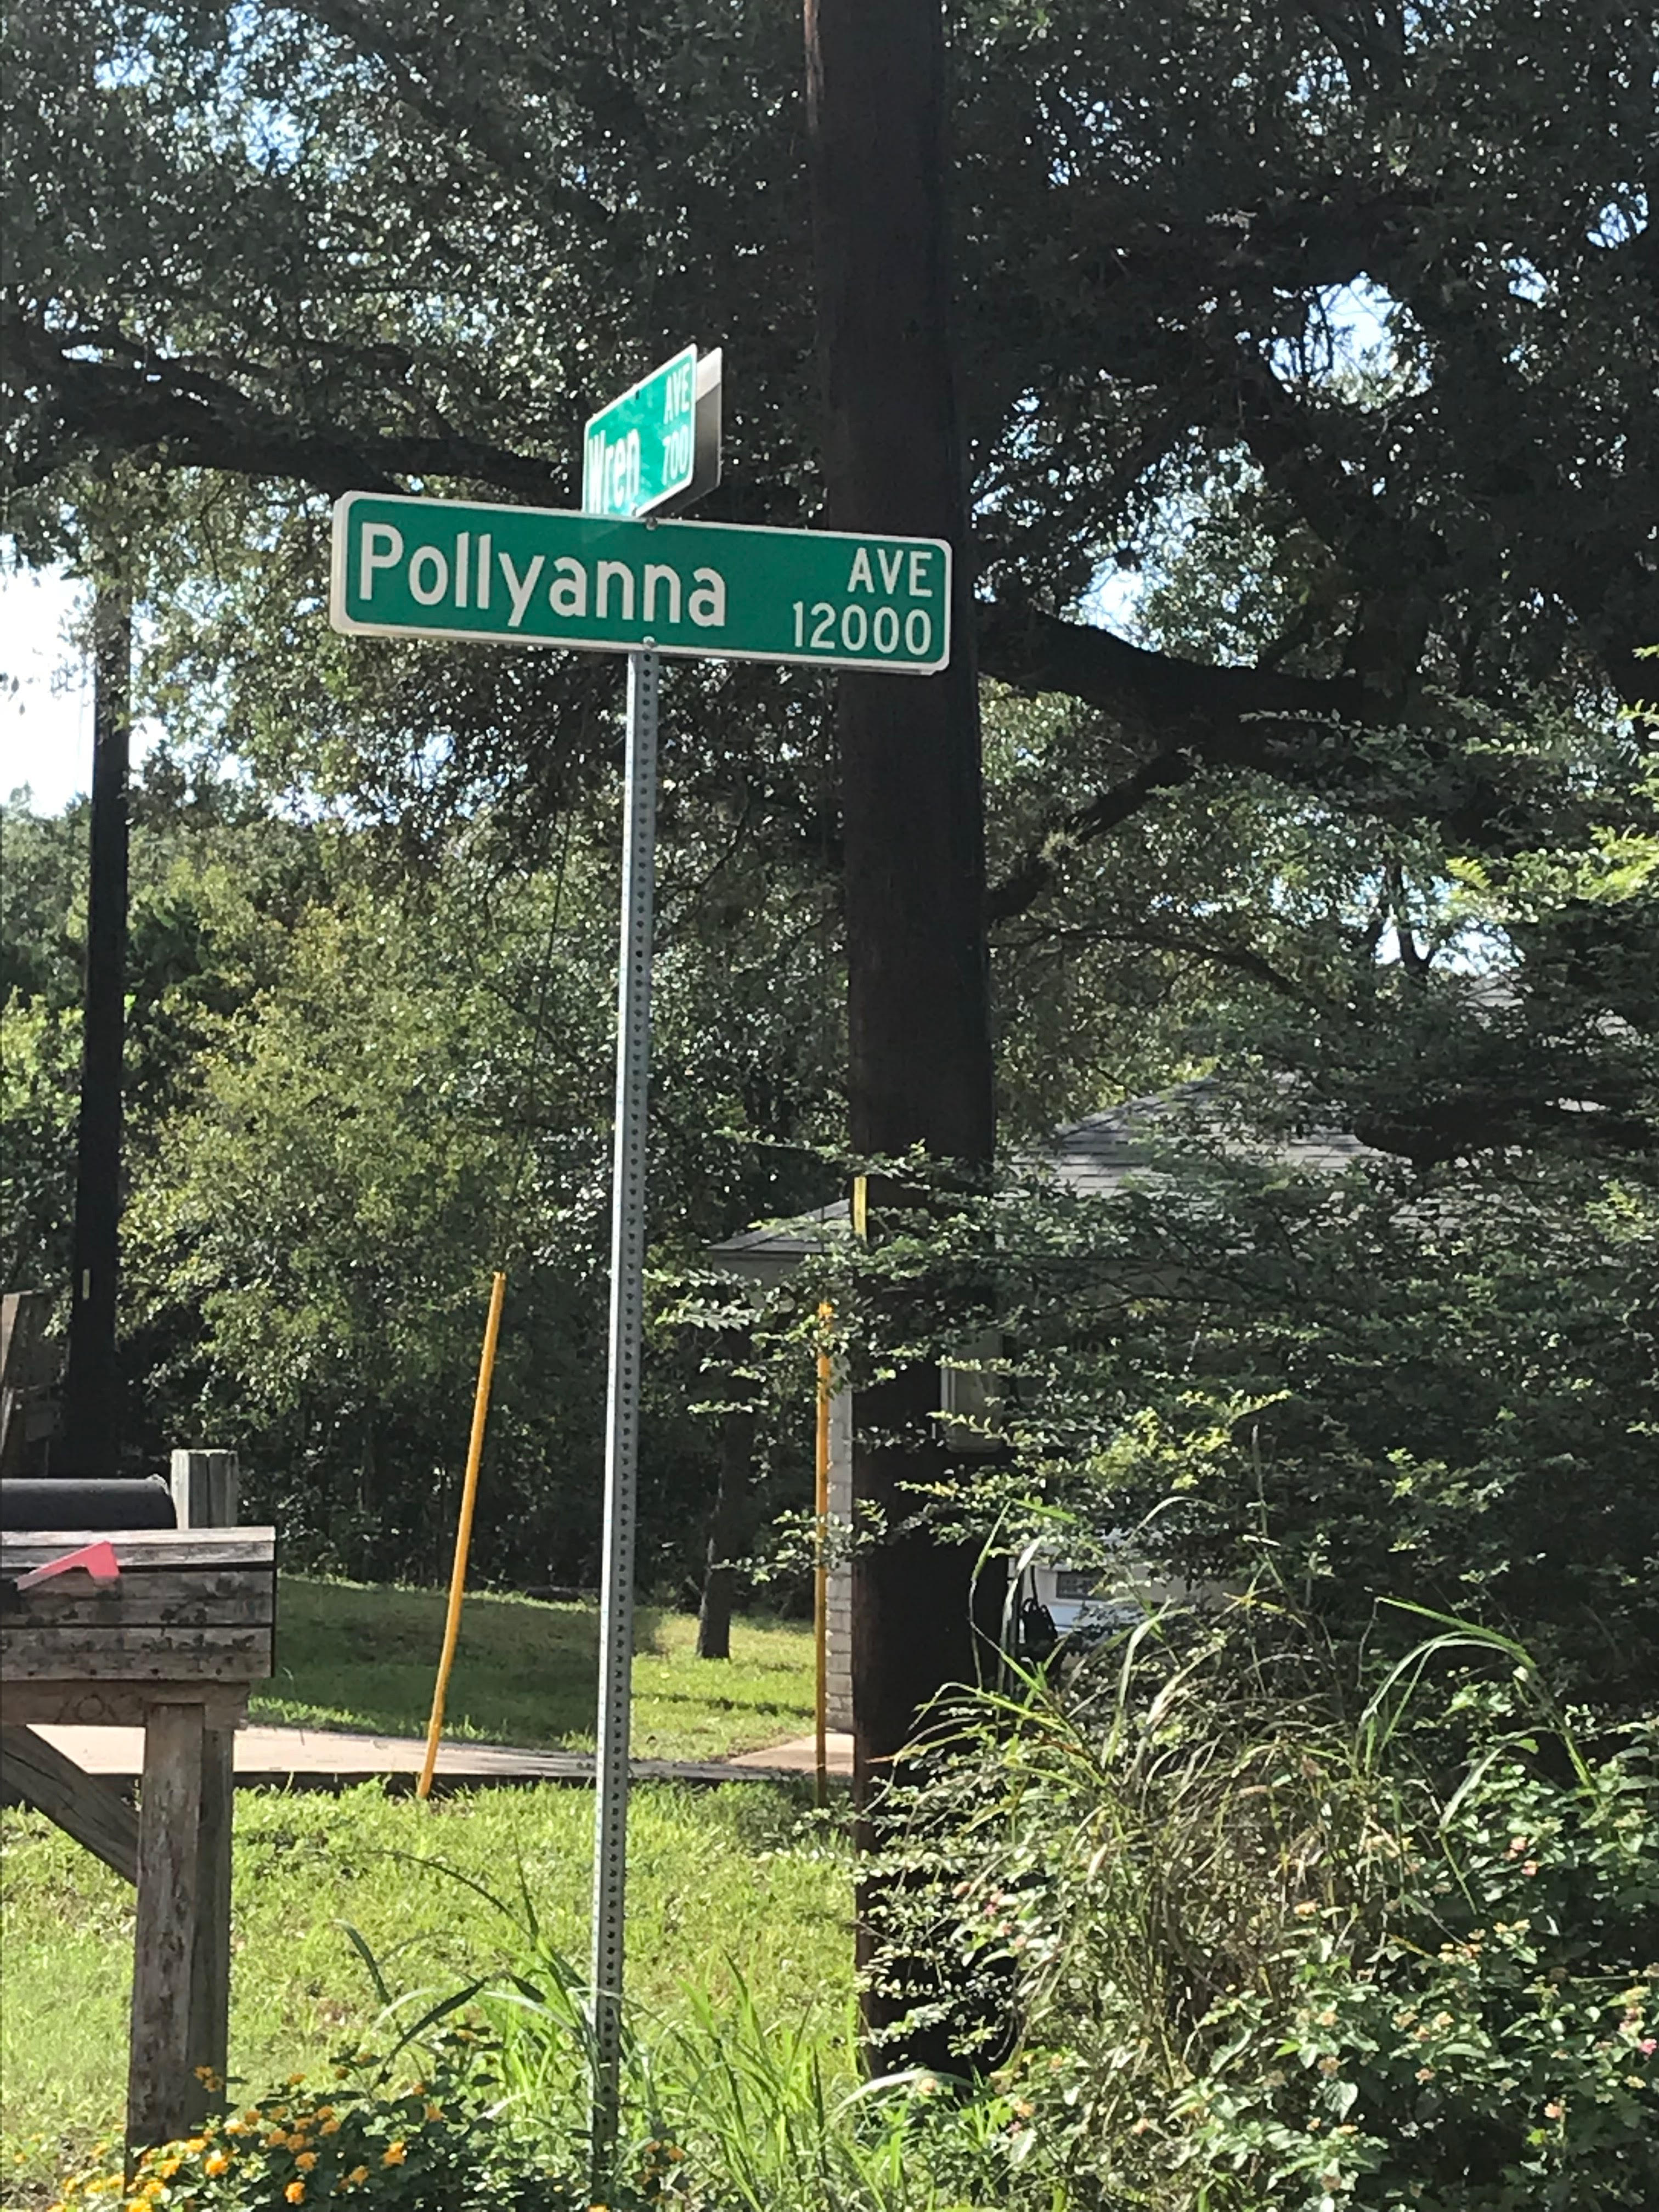 Polyanna Avenue